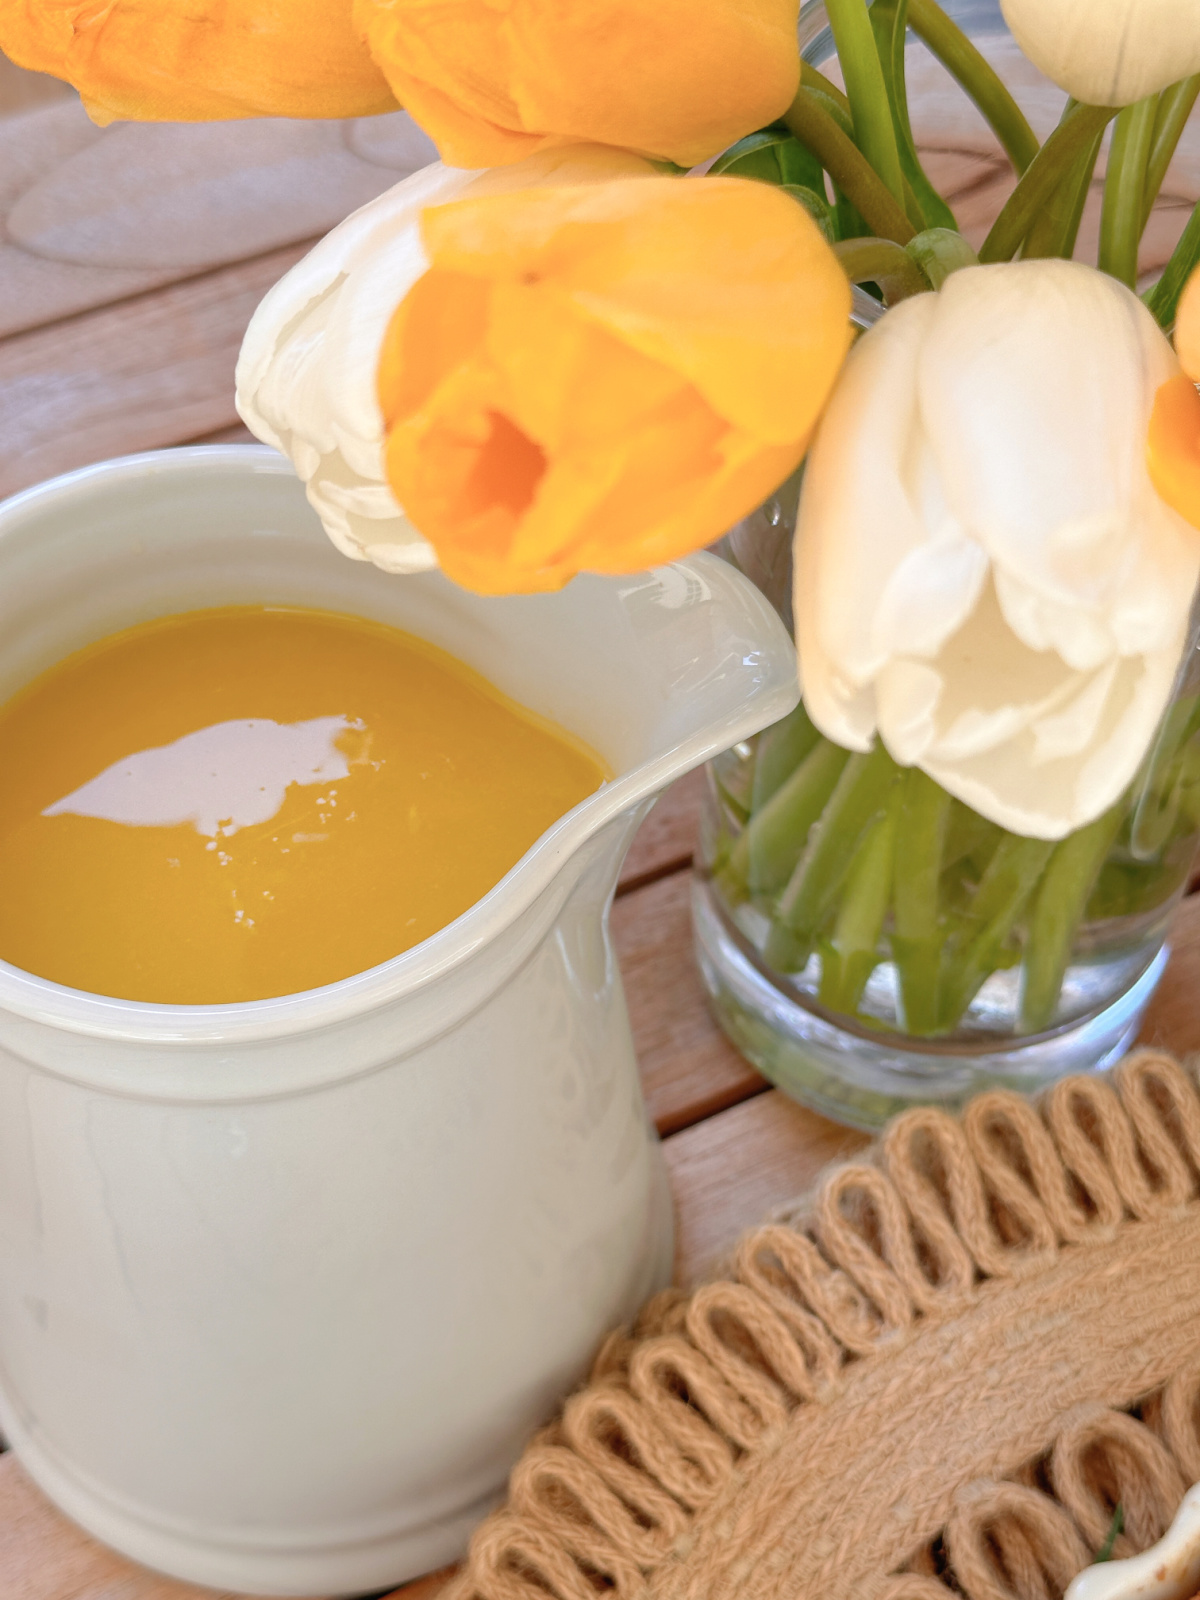 Pitcher of orange juice next to vase of yellow and white tulips.